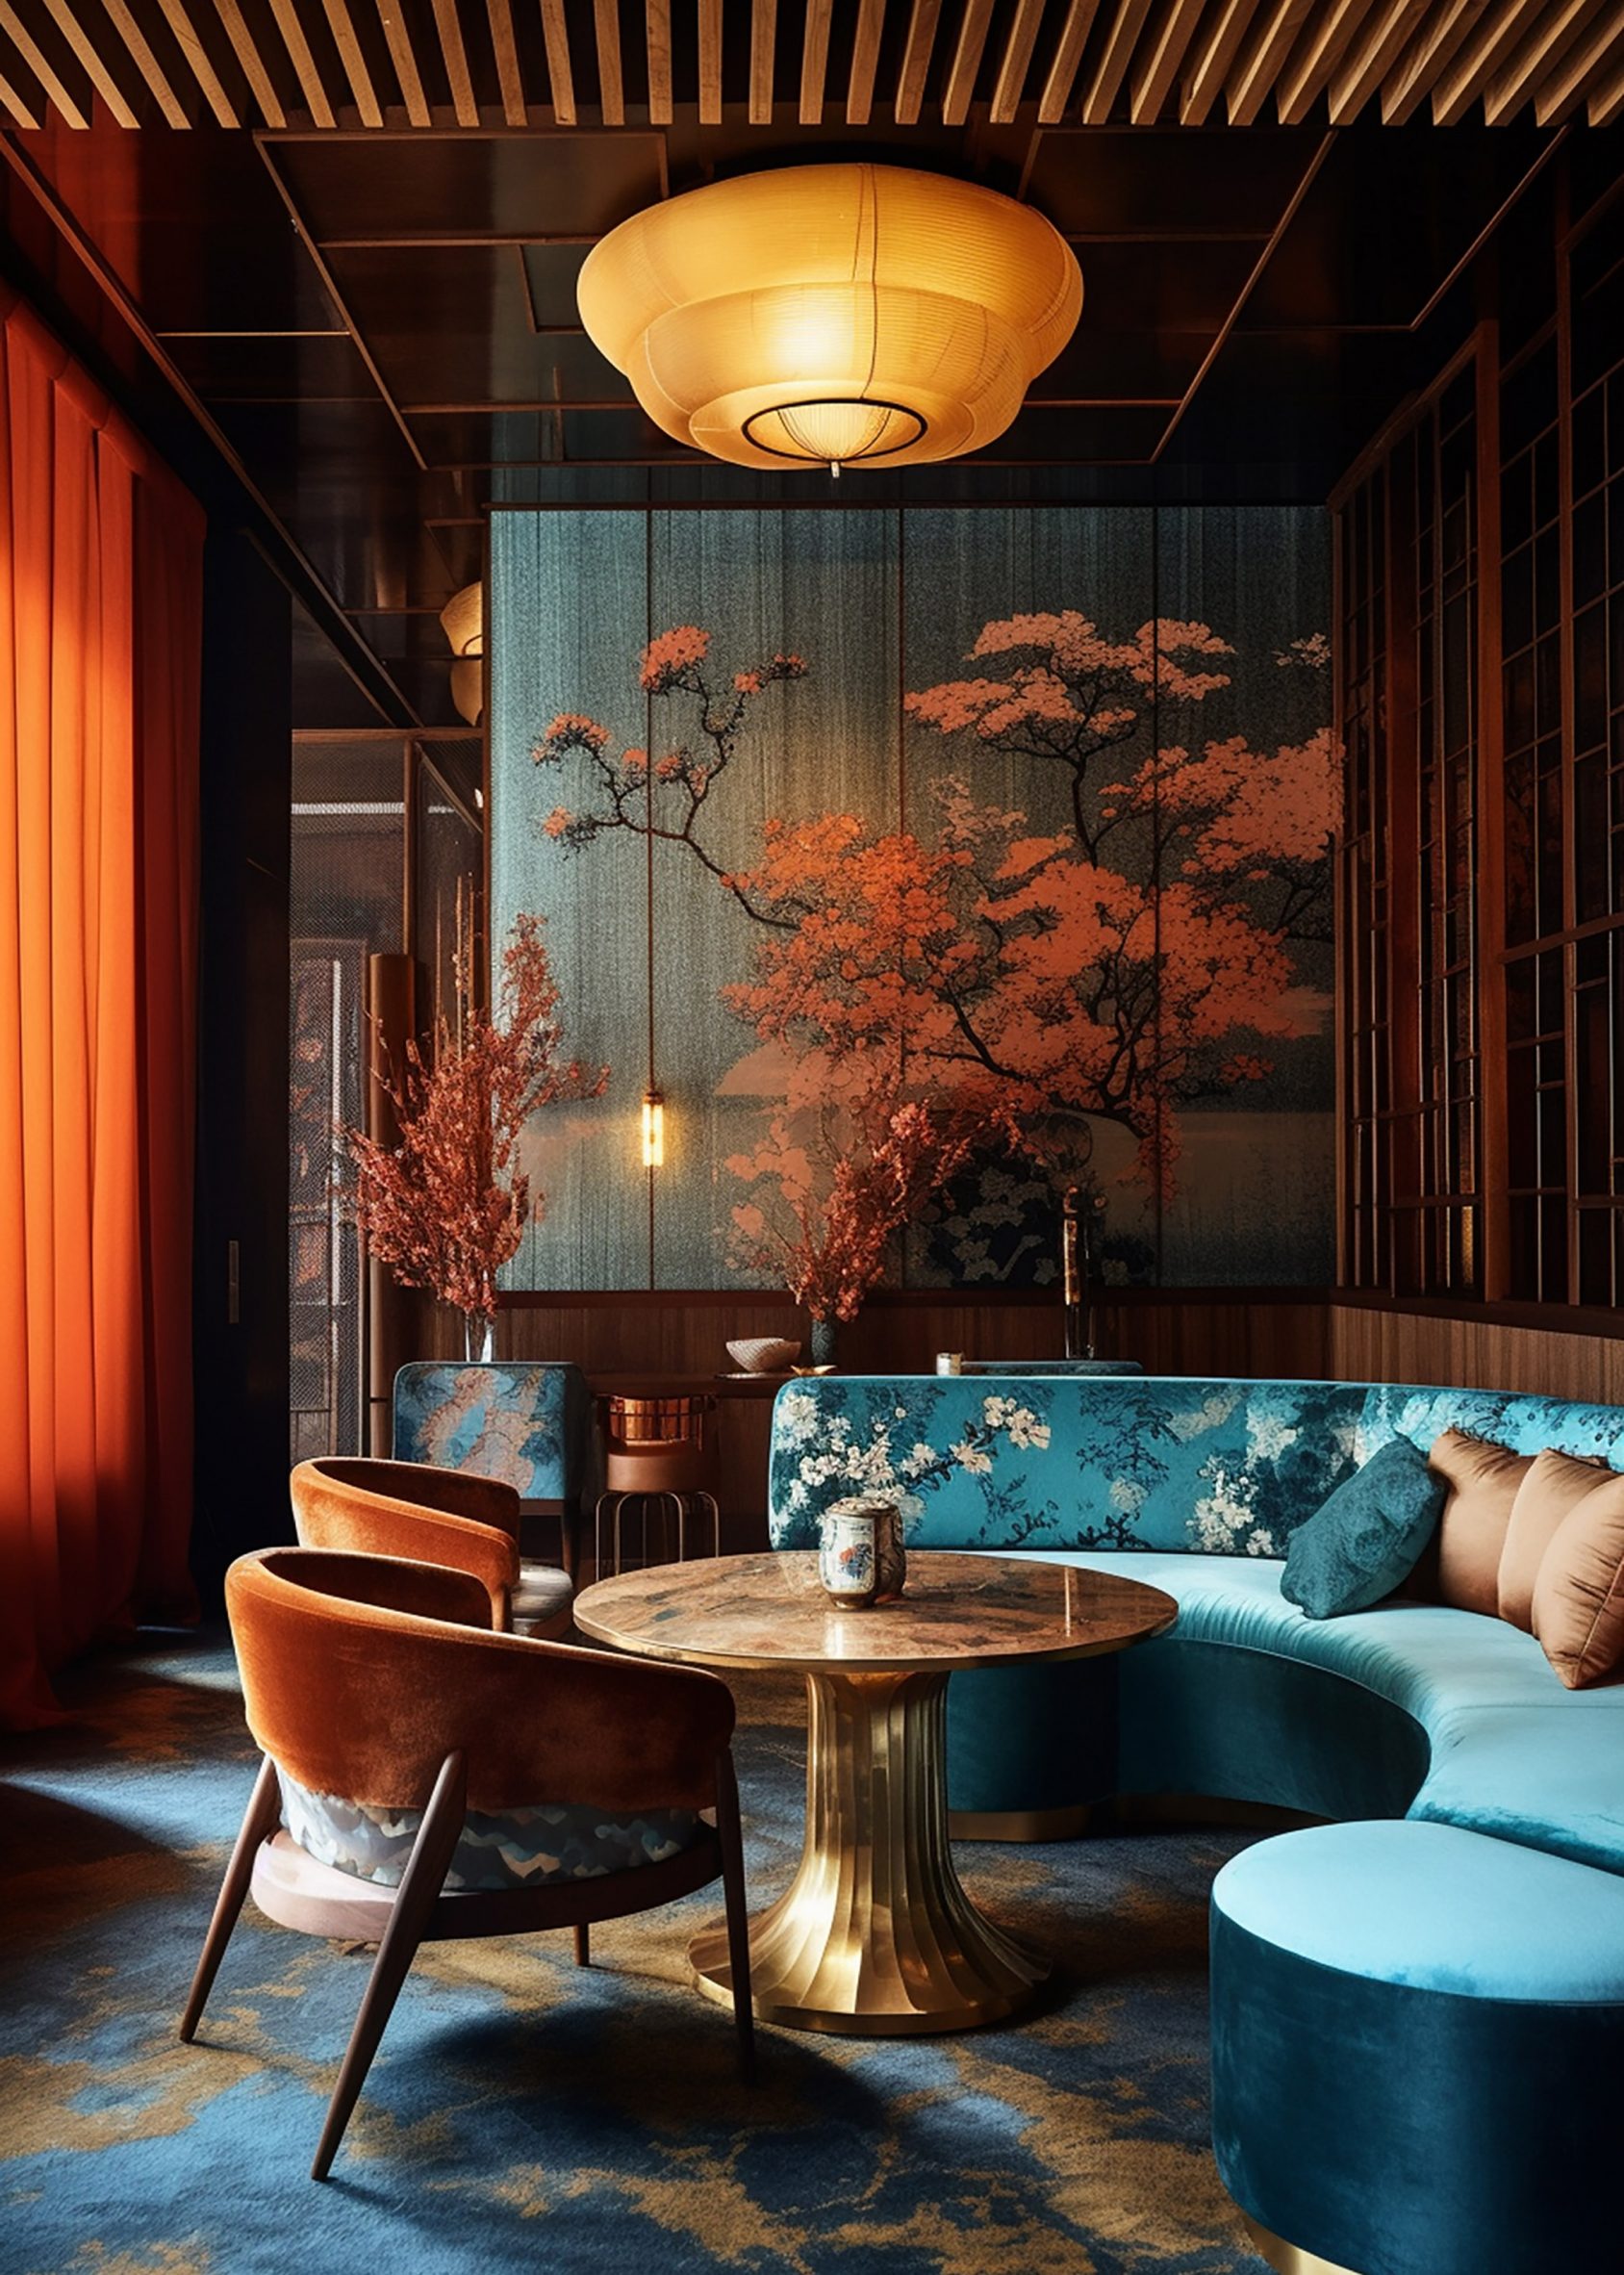 London restaurant interior by Sonet